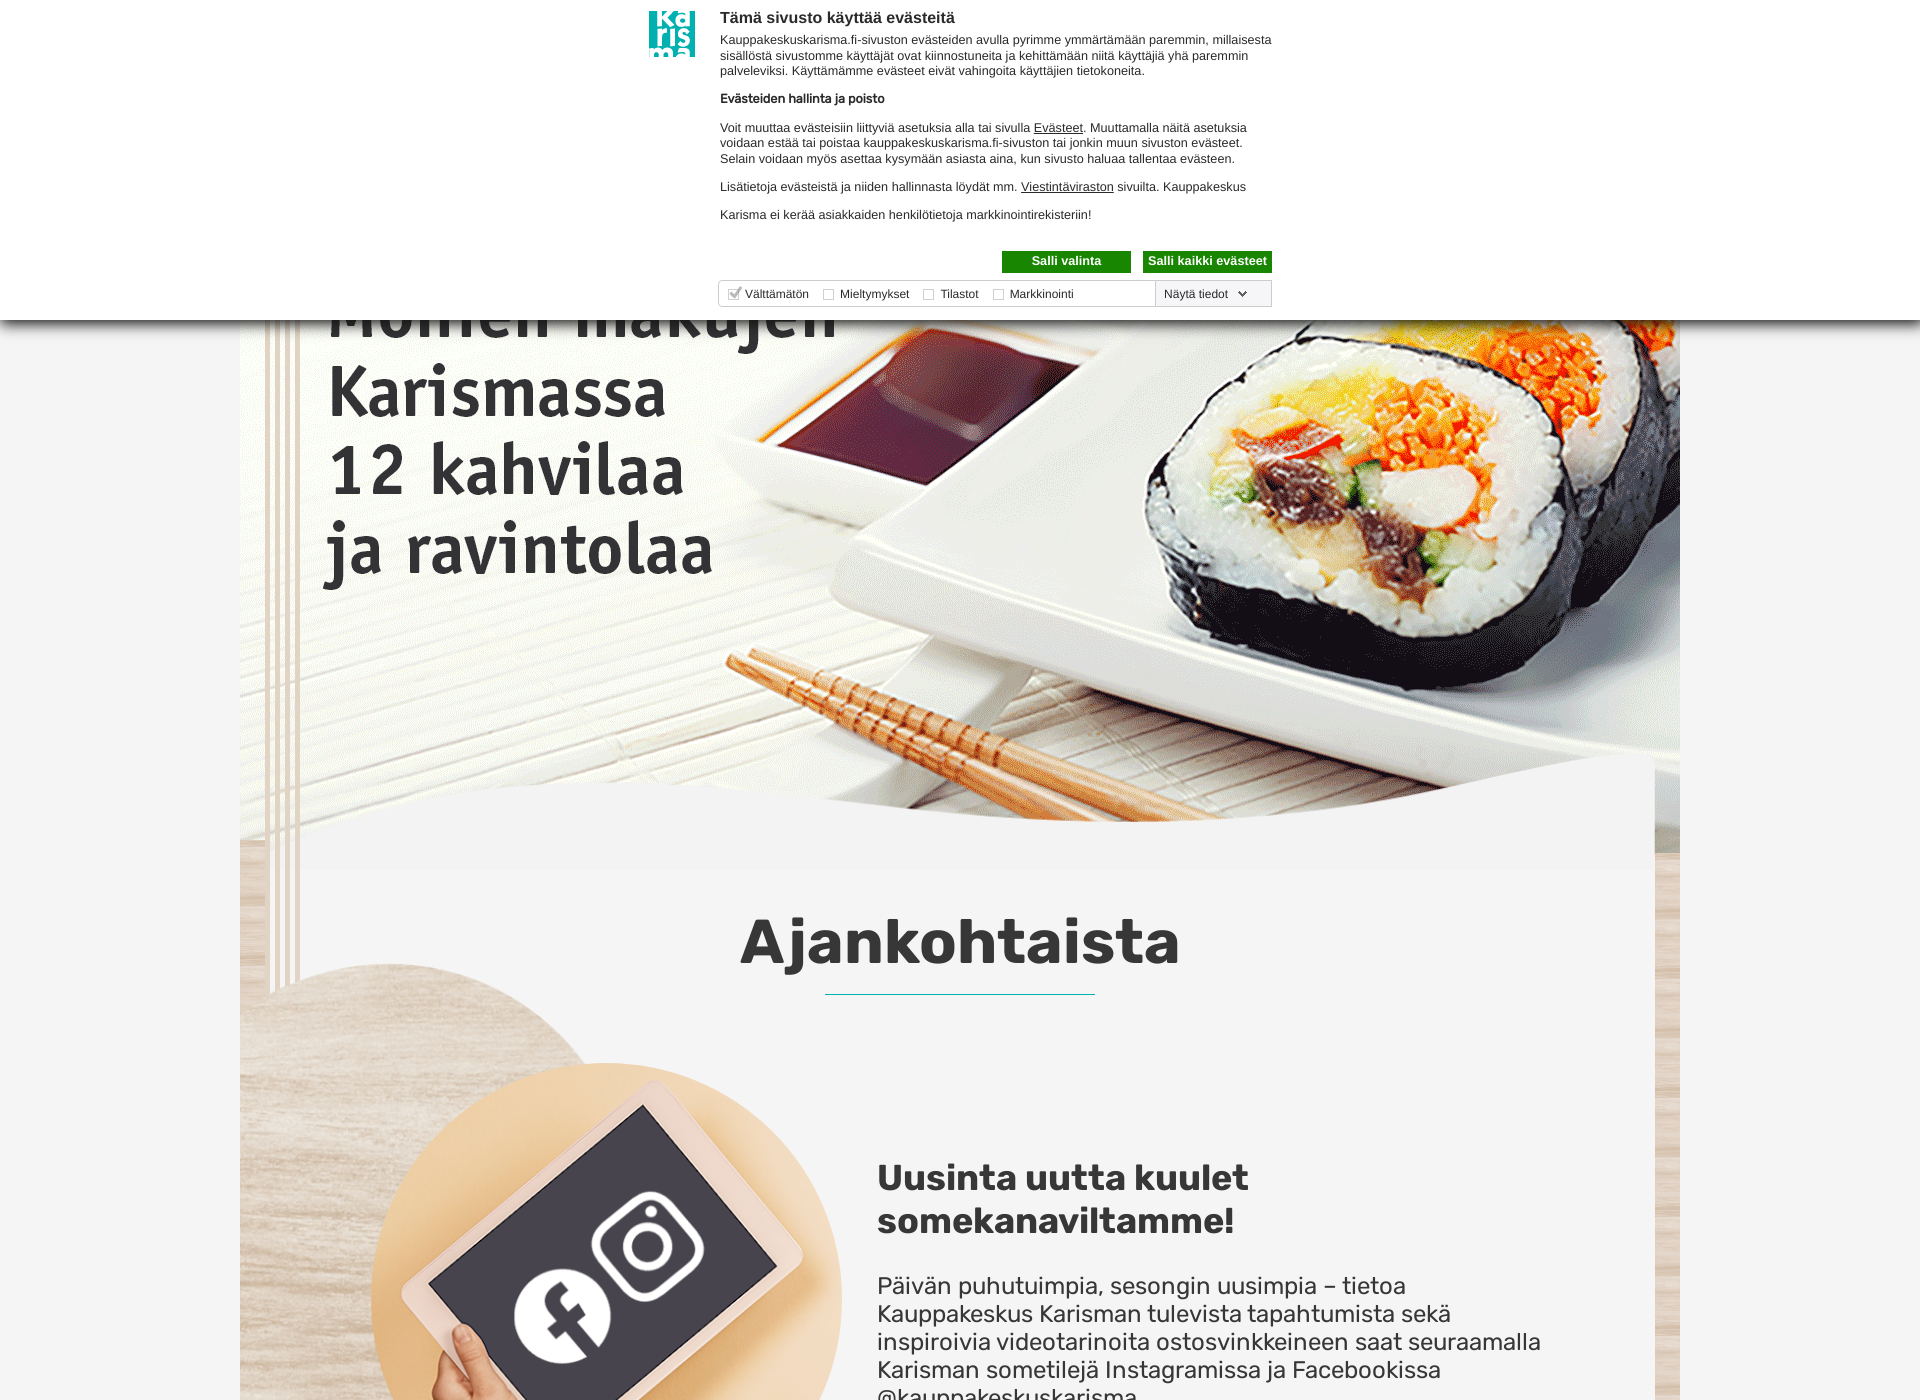 Skärmdump för kauppakeskuskarisma.fi